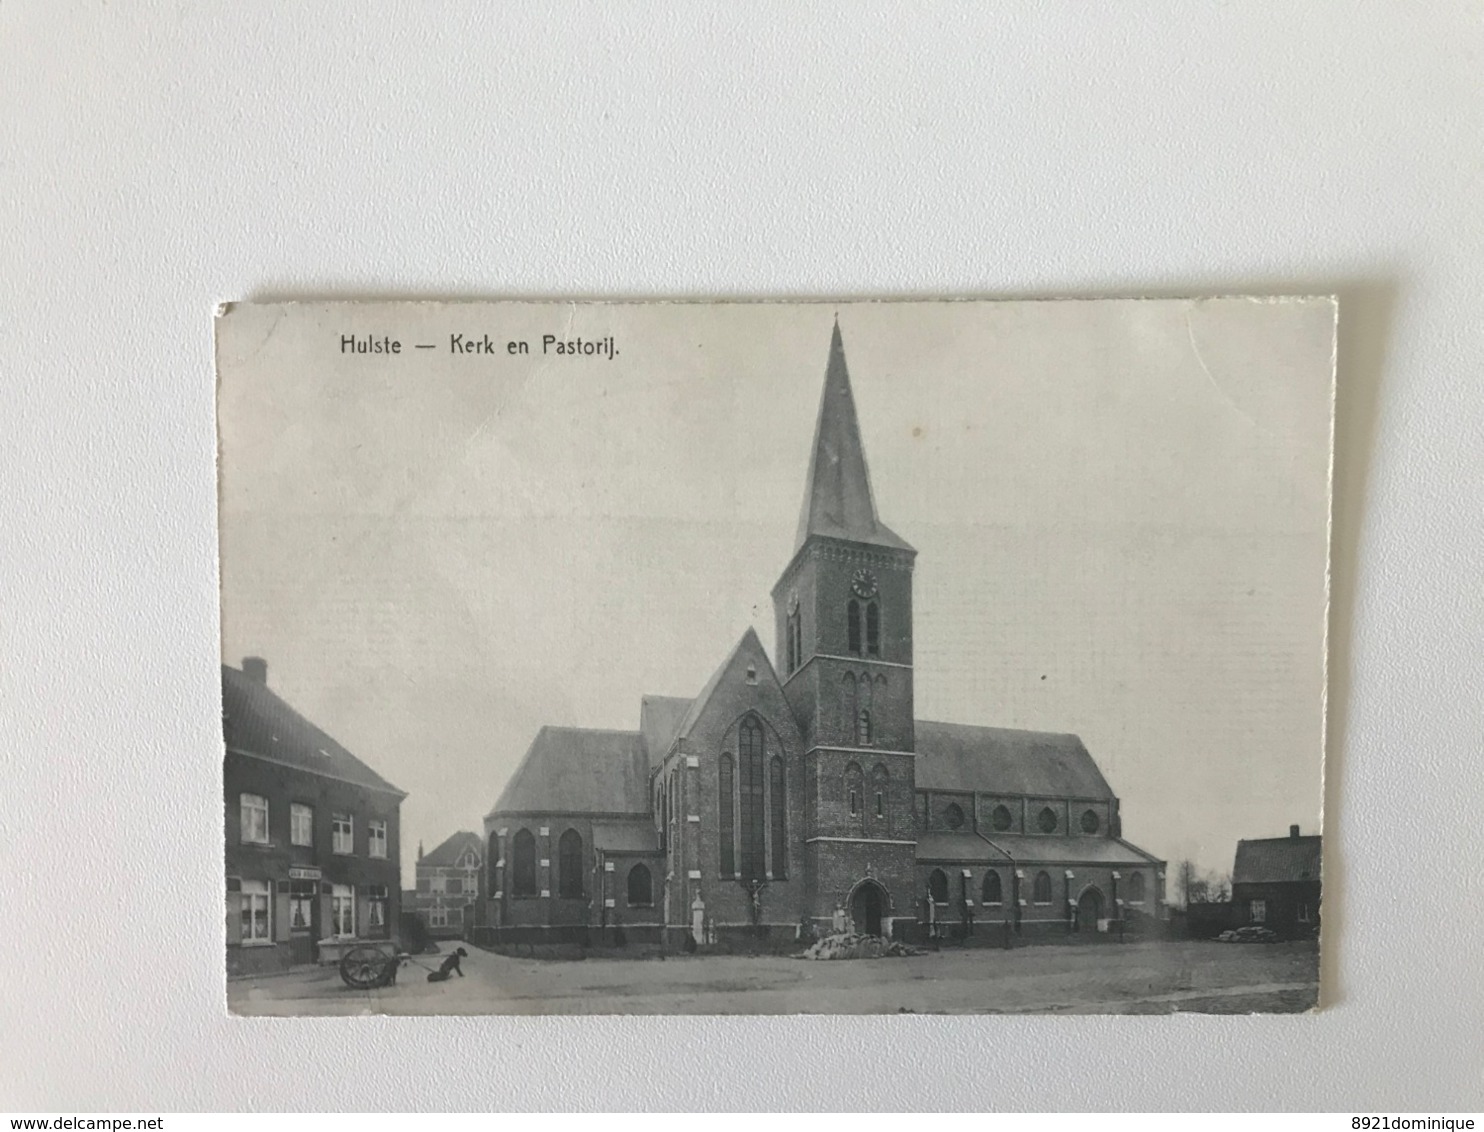 Hulste - Kerk En Pastorij - Attelage De Chien - Hondekar - Dog Char - Harelbeke